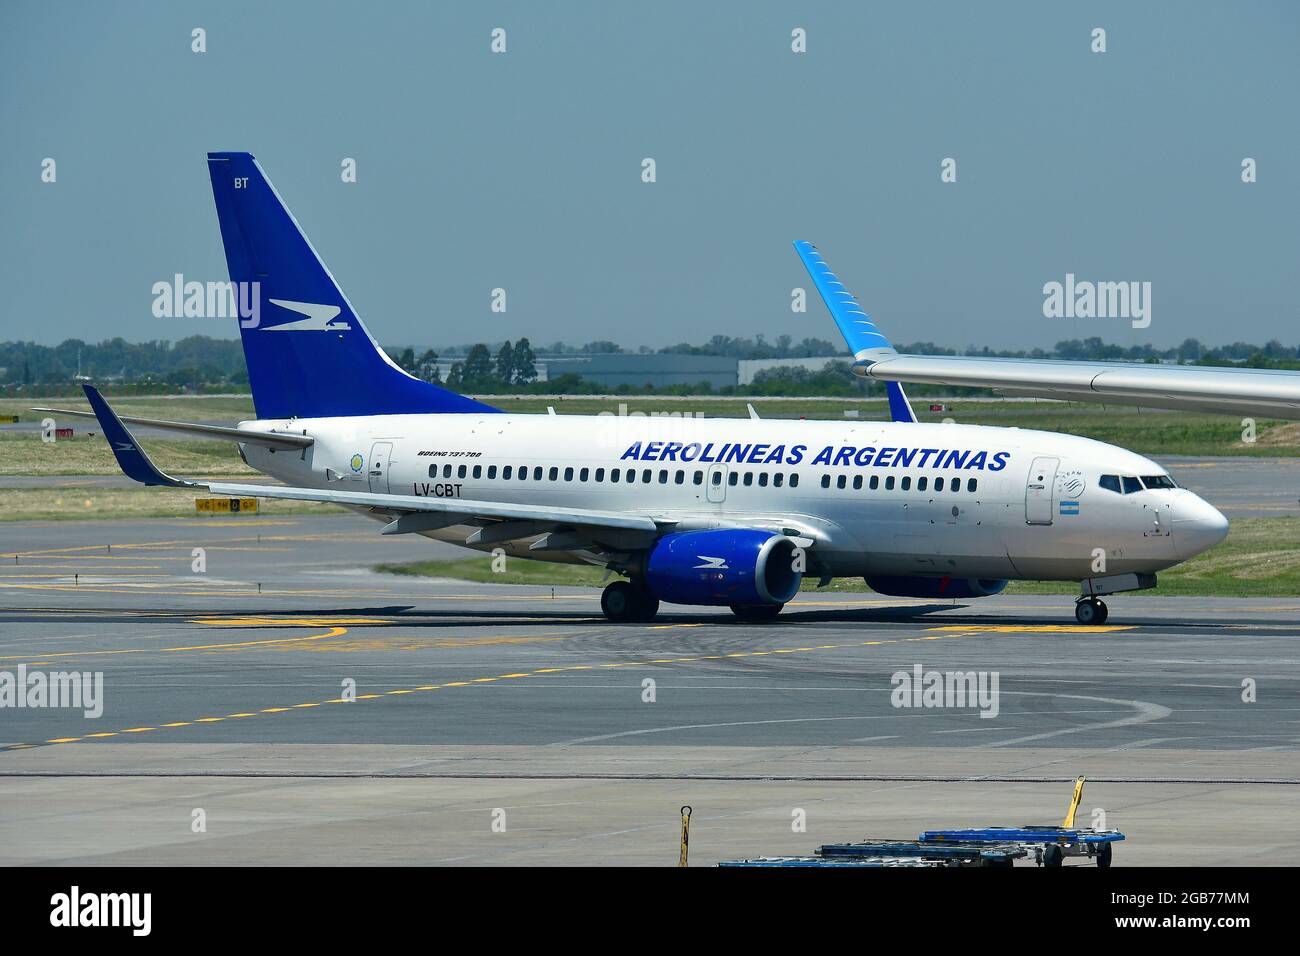 Aerolíneas Argentinas (is Argentina's largest airline), Boeing 737-700 airplane Stock Photo